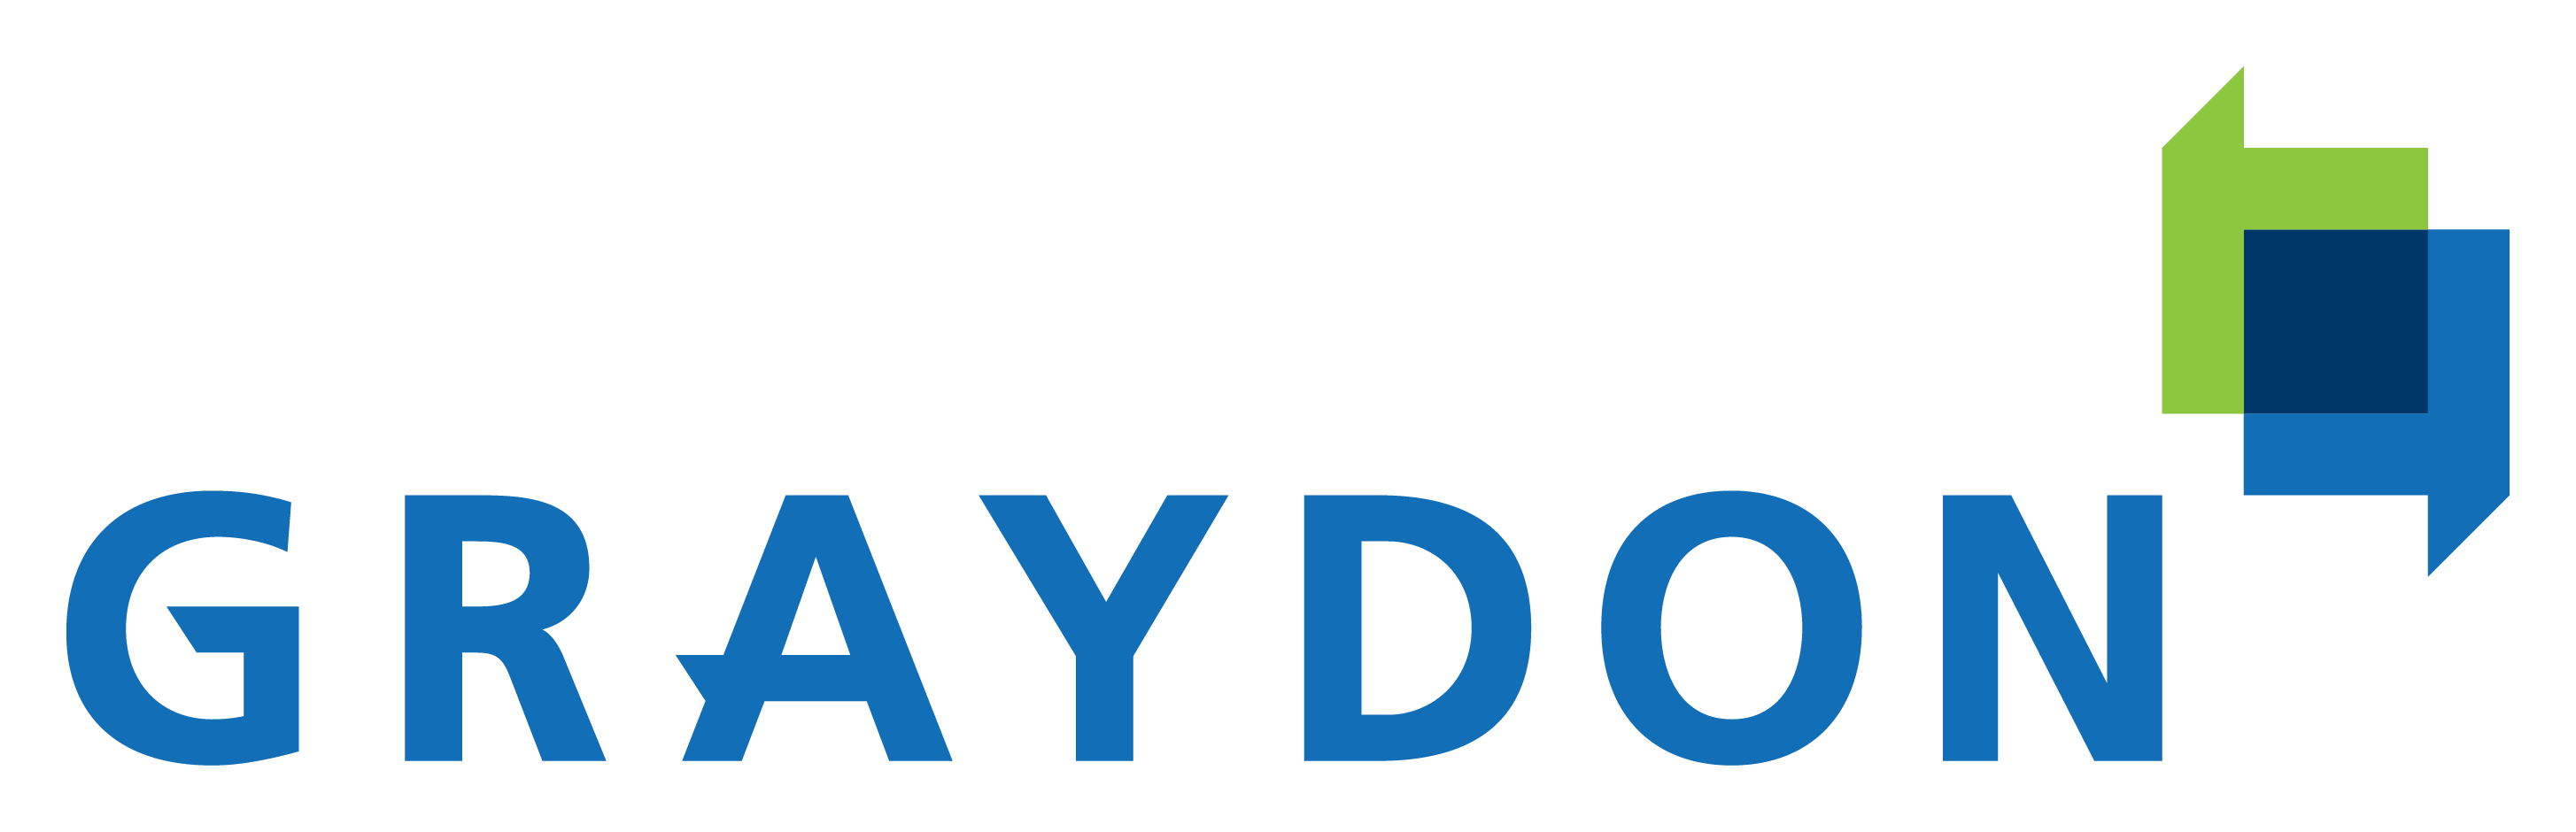 Graydon_Logo_PMS